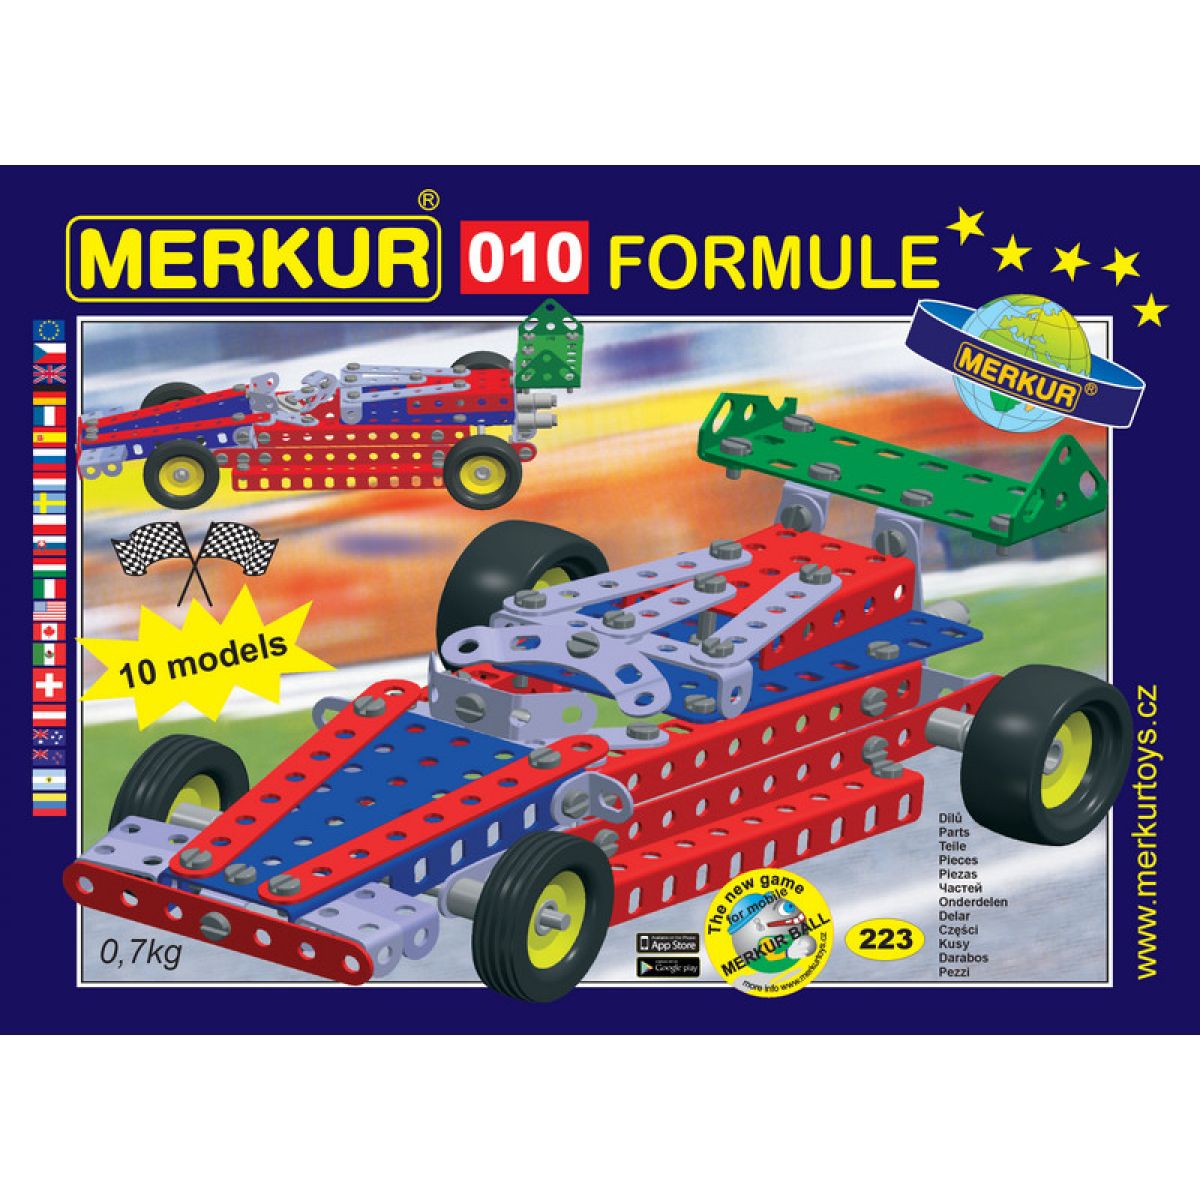 Merkur Stavebnica M 010 Formula